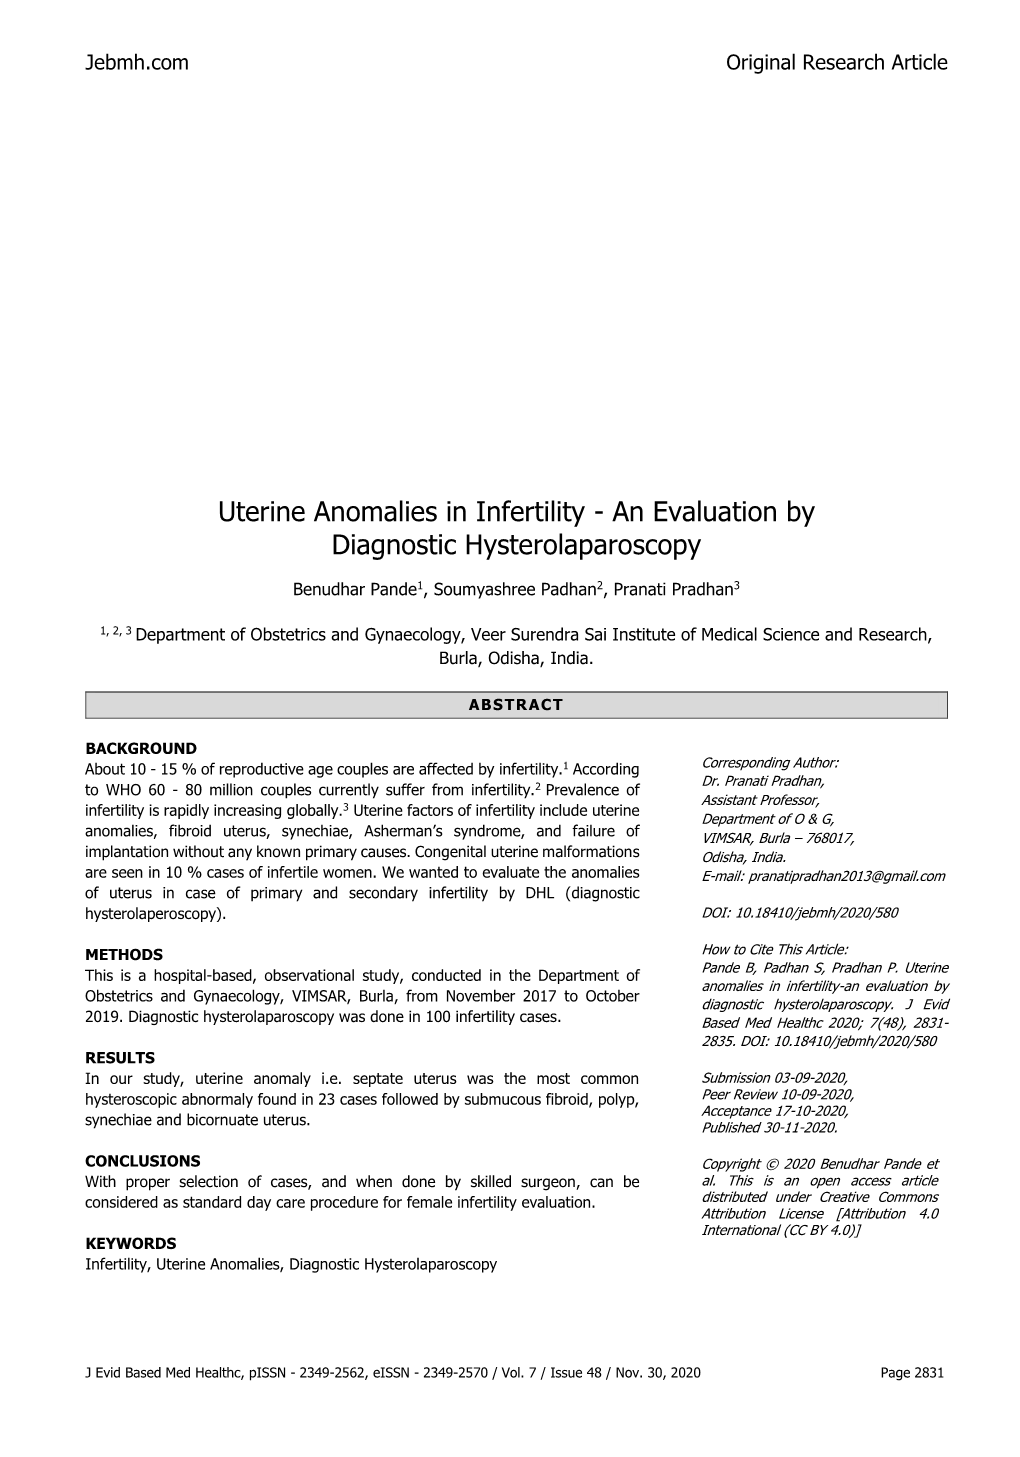 Uterine Anomalies in Infertility - an Evaluation by Diagnostic Hysterolaparoscopy